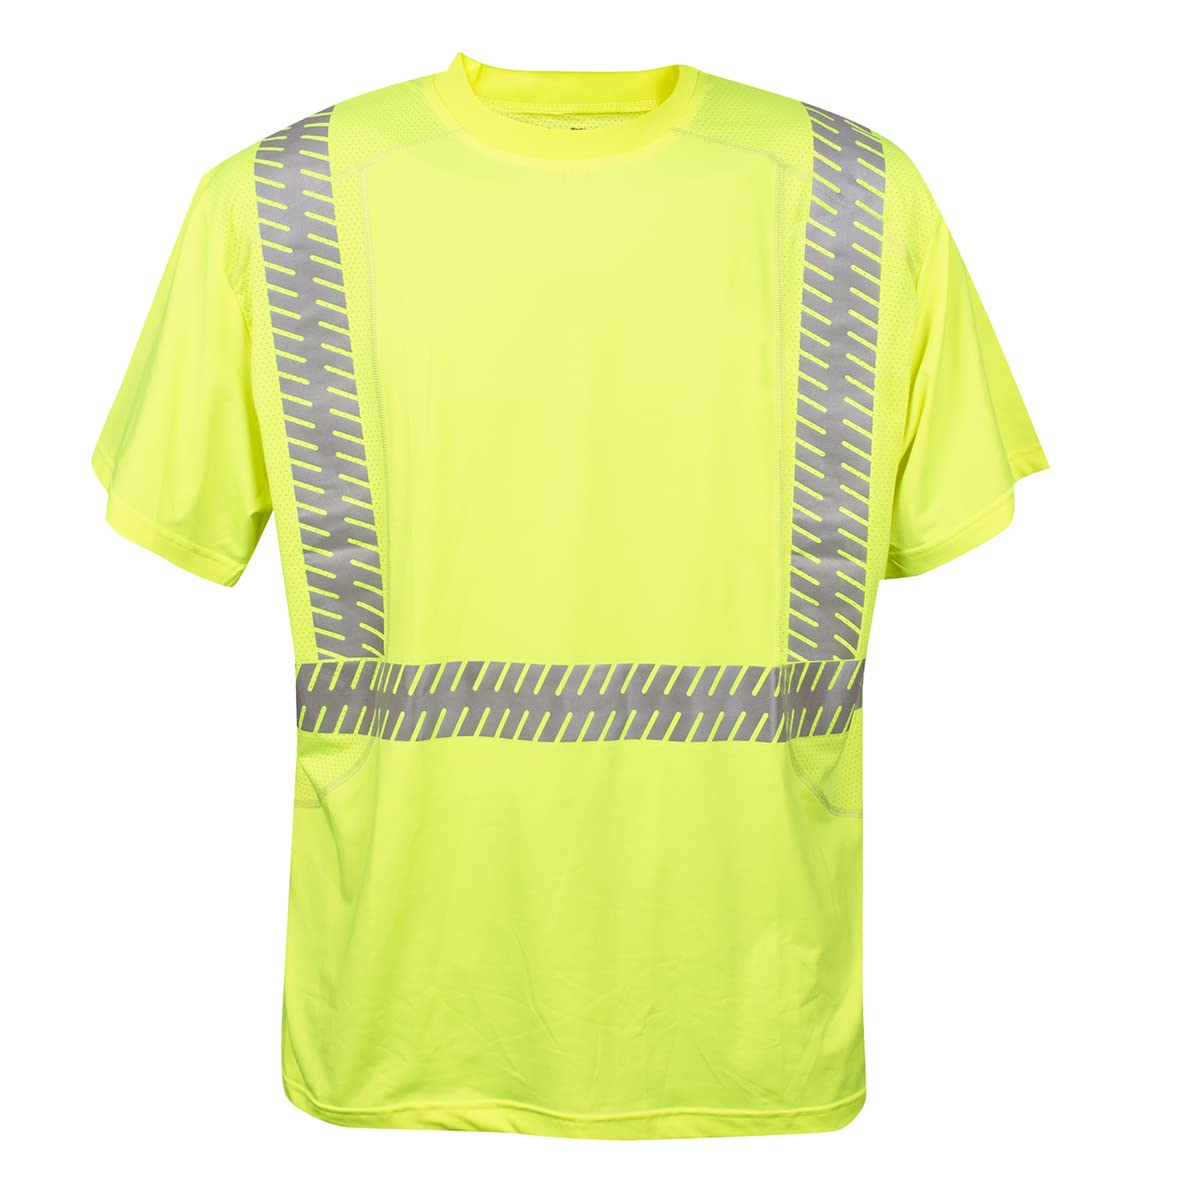 Reflective Shirt, High-Visibility Yellow T-Shirt, Class 2, Spandex